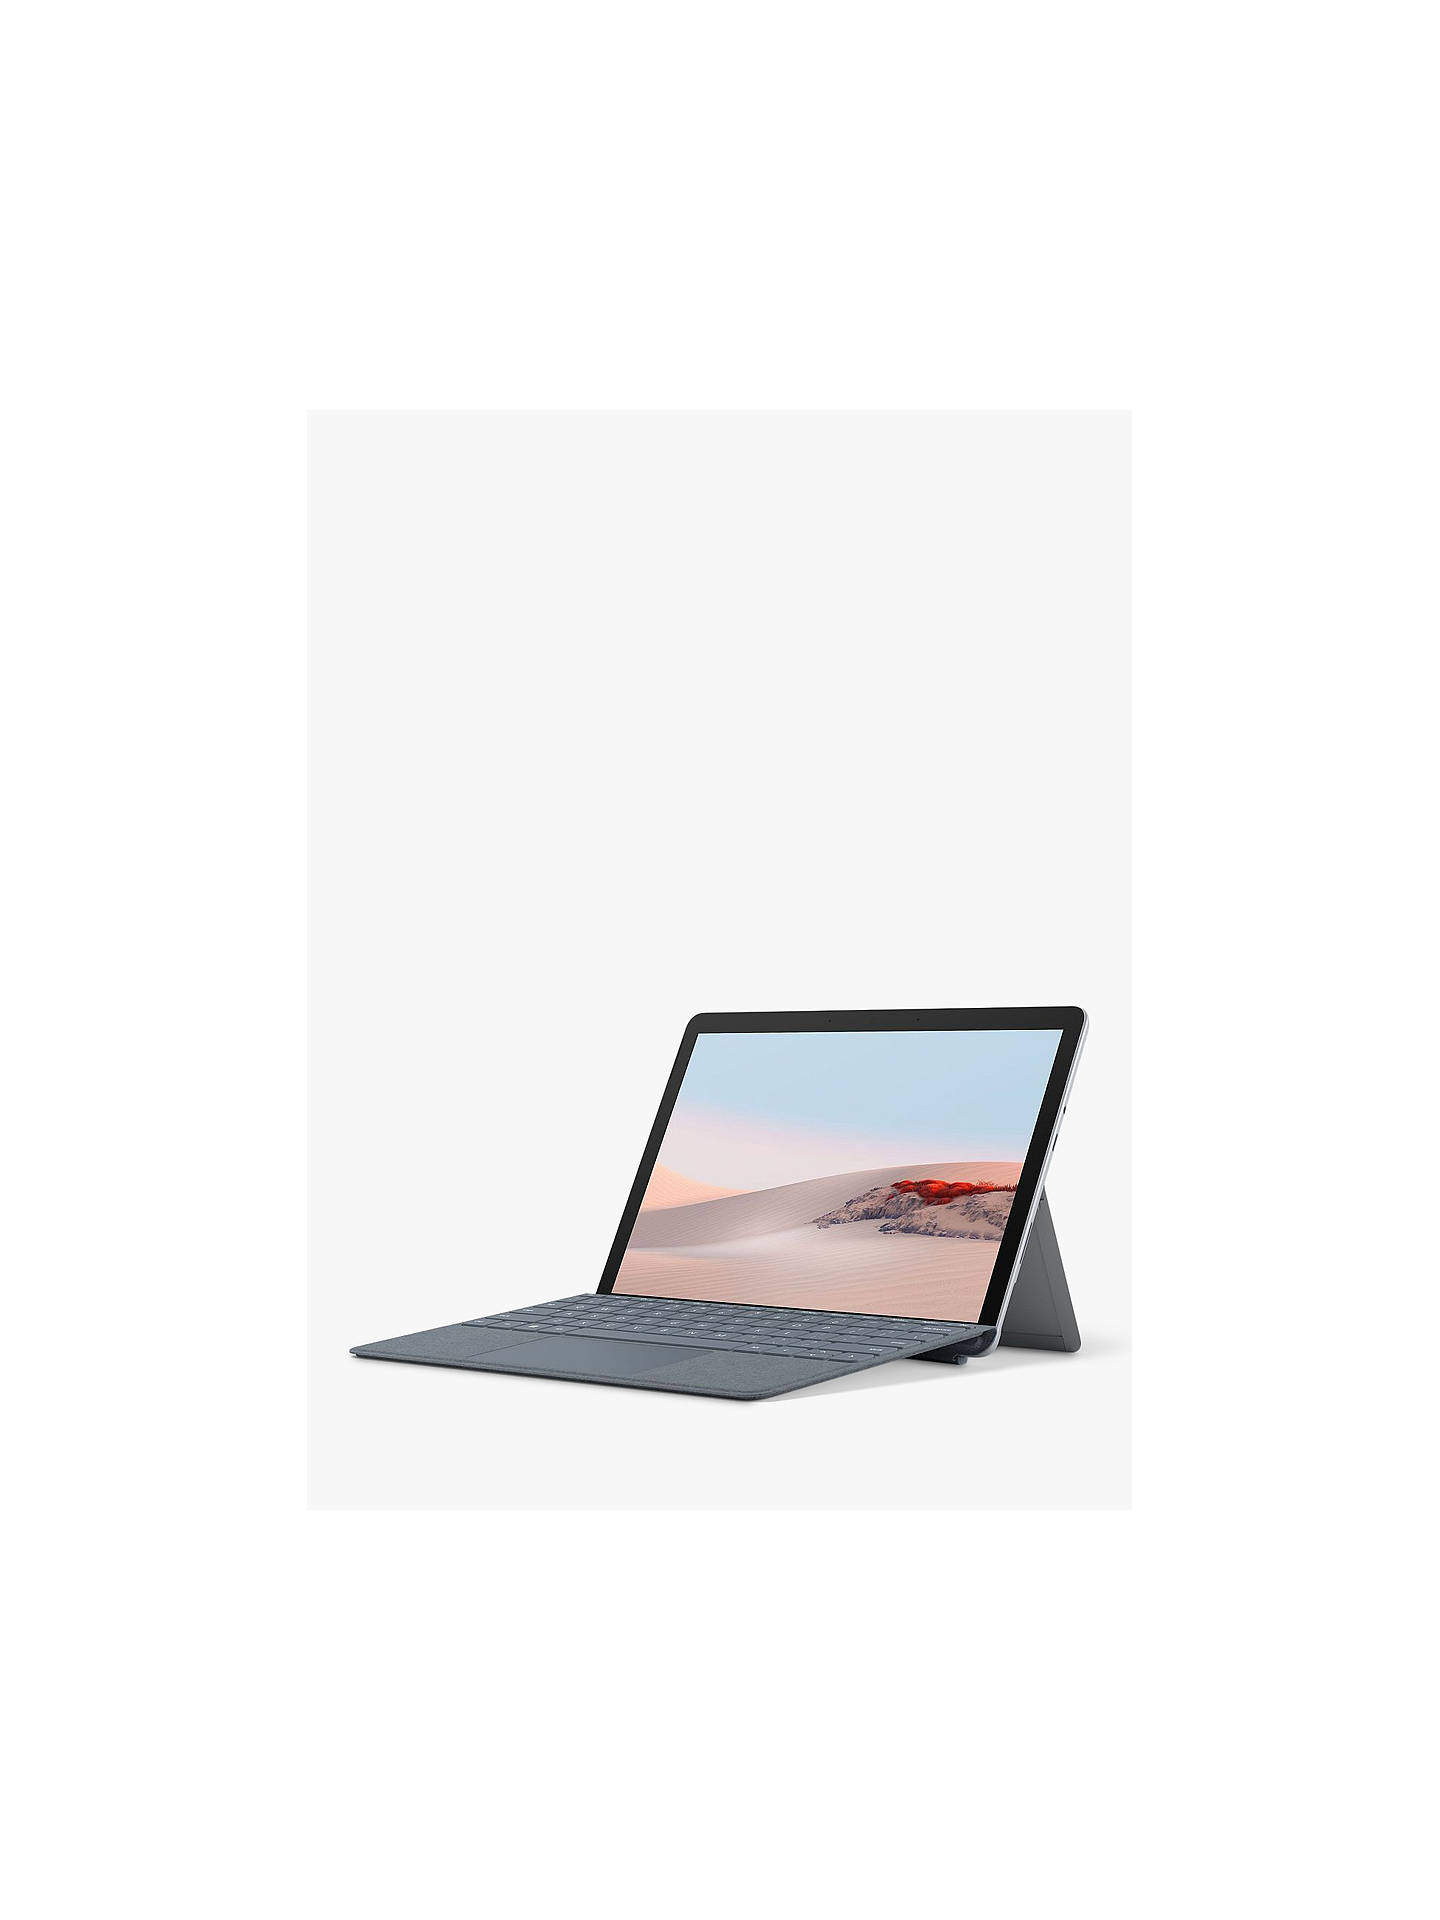 Microsoft Surface Go 2, Intel Pentium Gold, 8GB RAM, 128GB SSD, 10.5